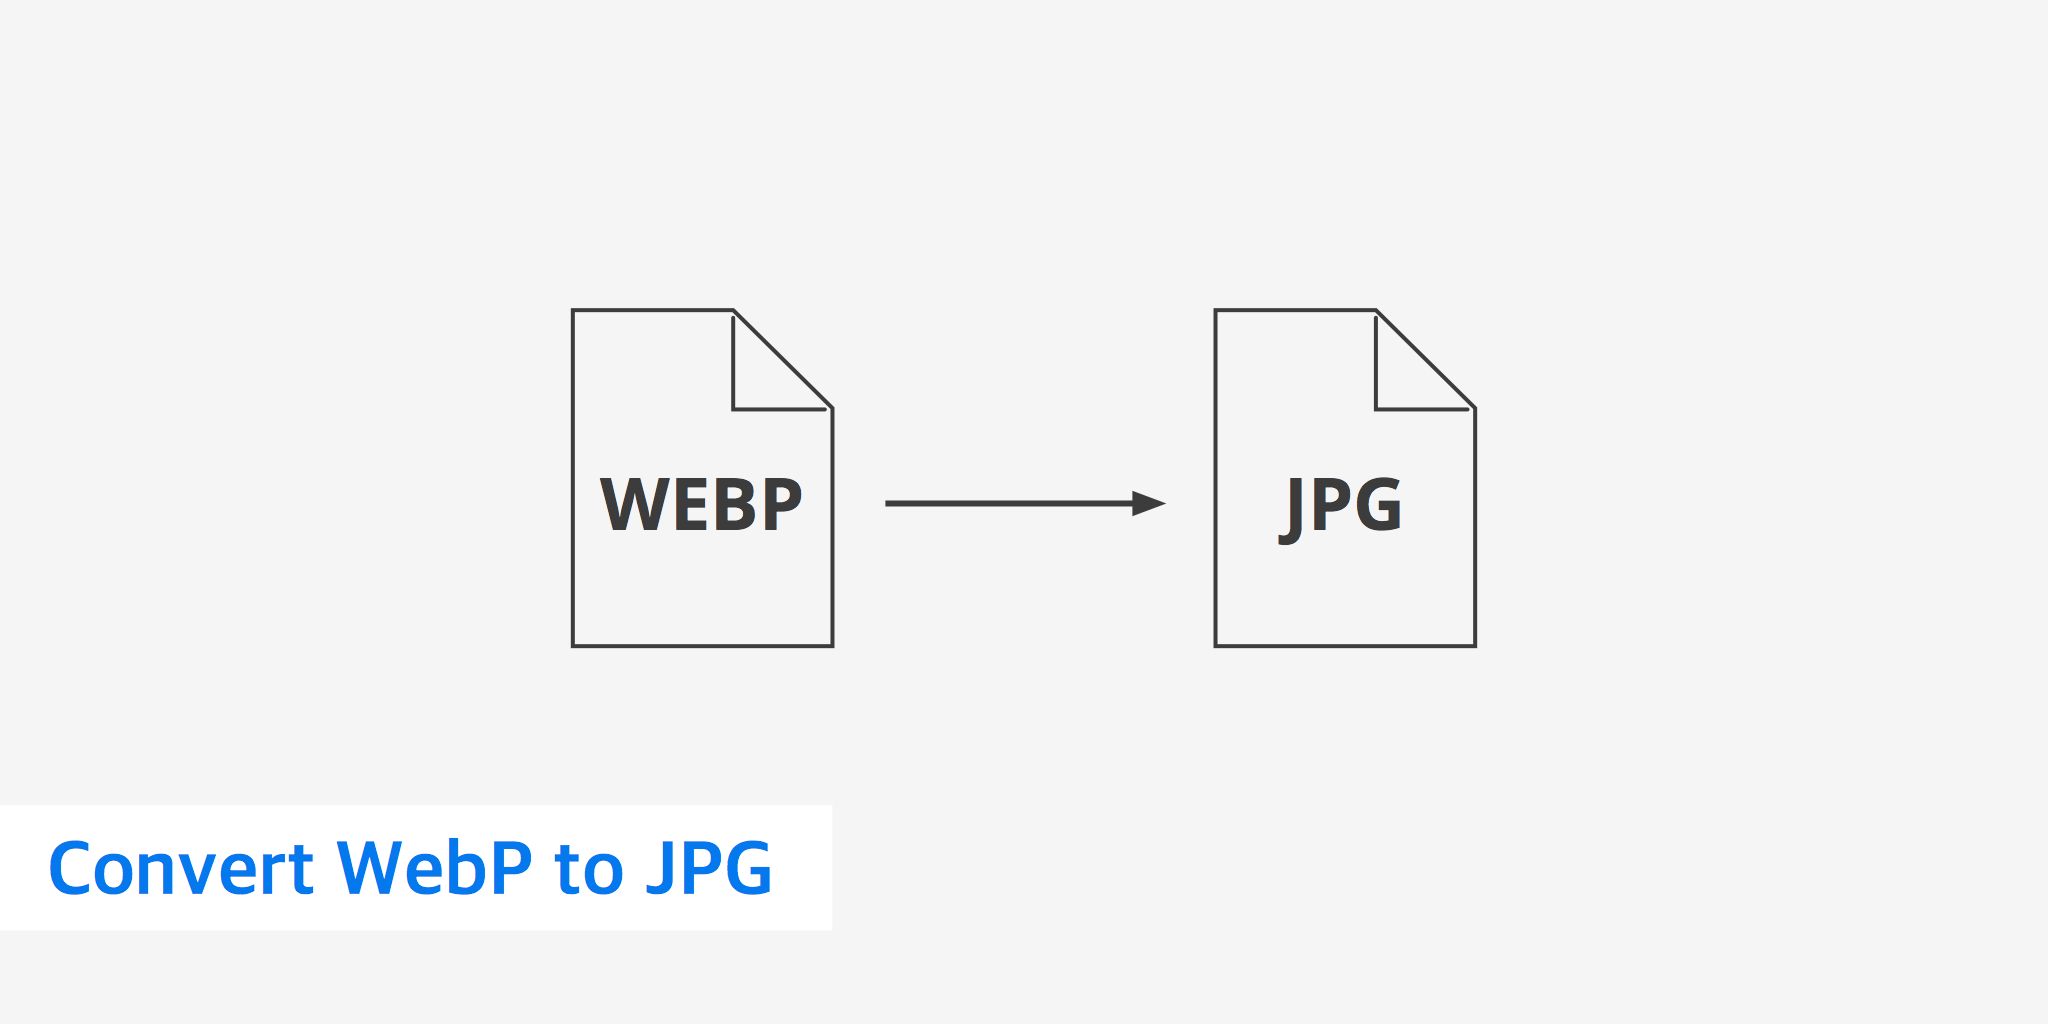 How to Convert WebP to JPG